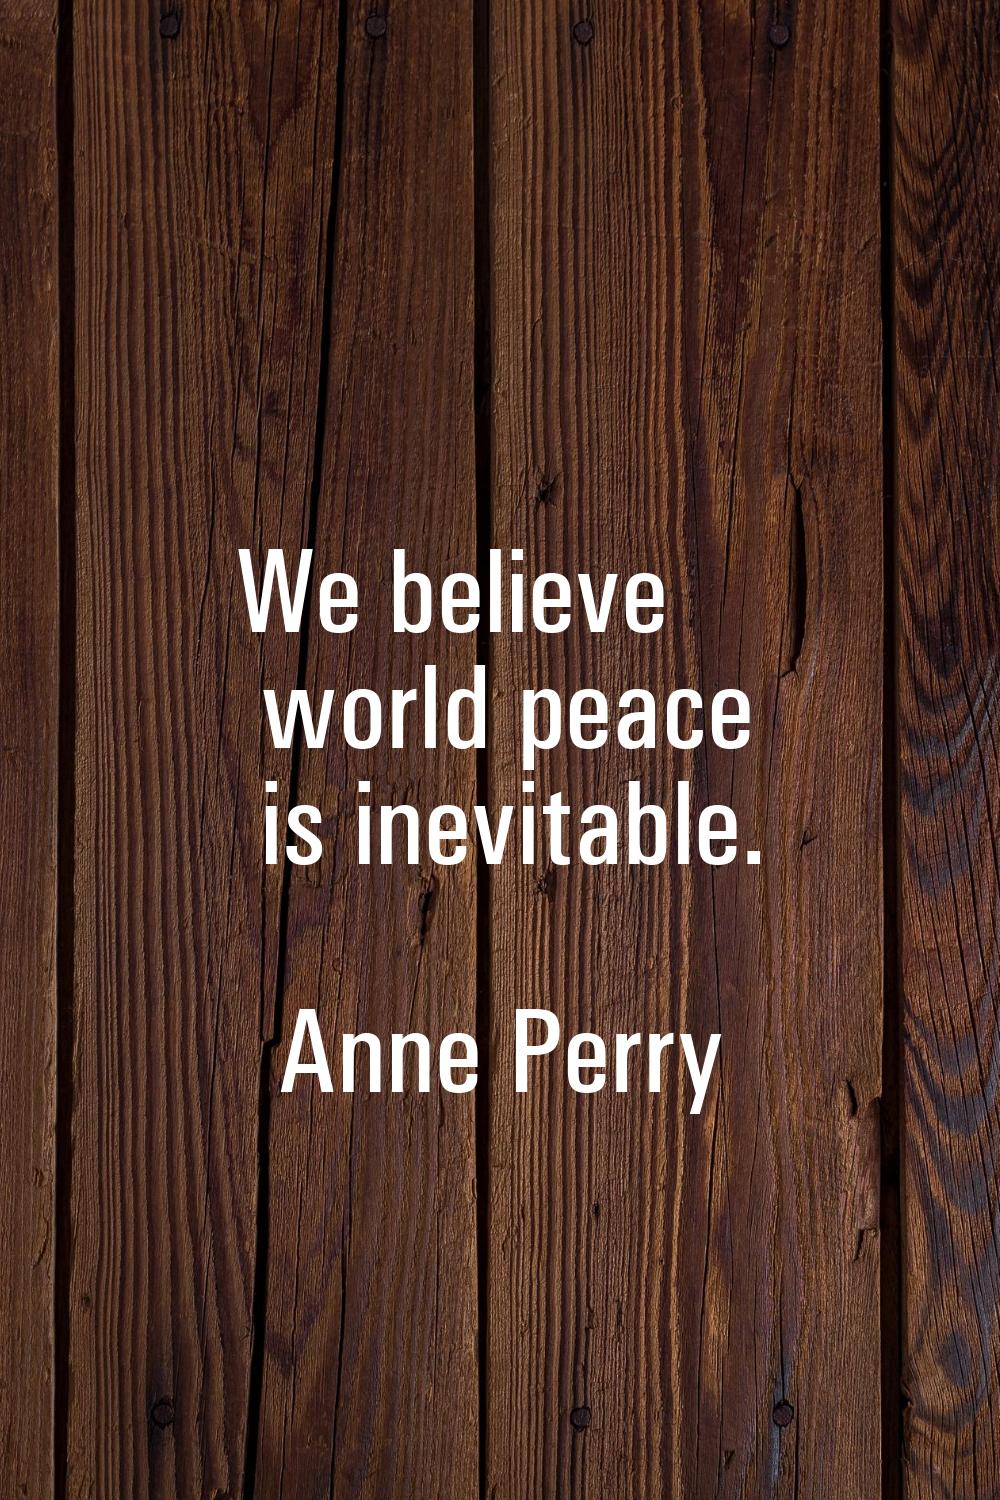 We believe world peace is inevitable.